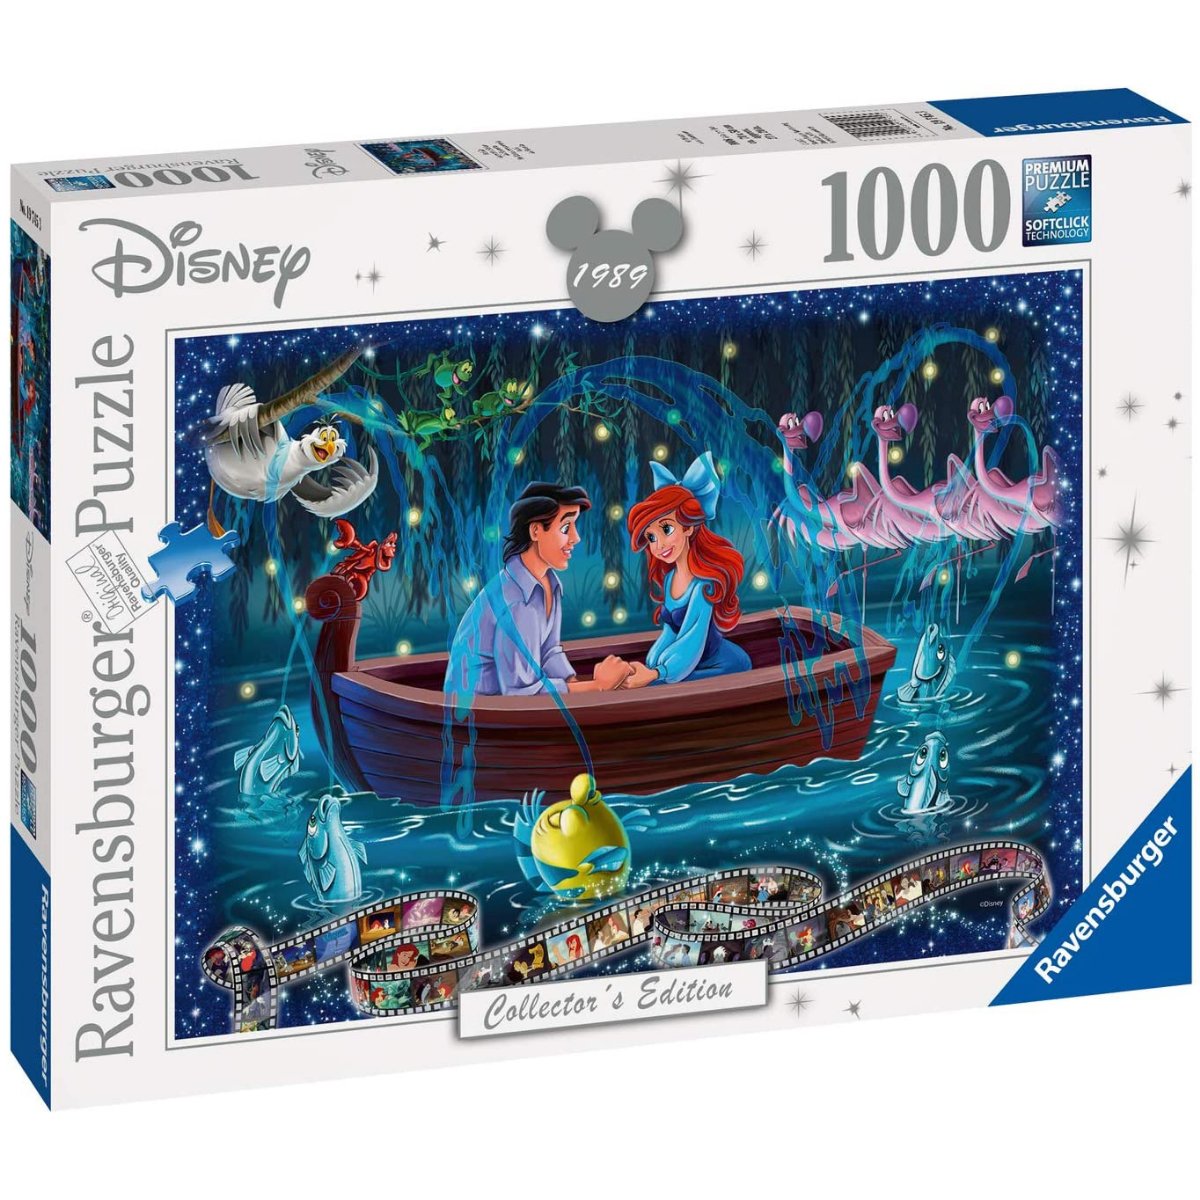 Ravensburger Disney Collector's Edition Little Mermaid 1000 Piece Jigsaw Puzzle - Phillips Hobbies